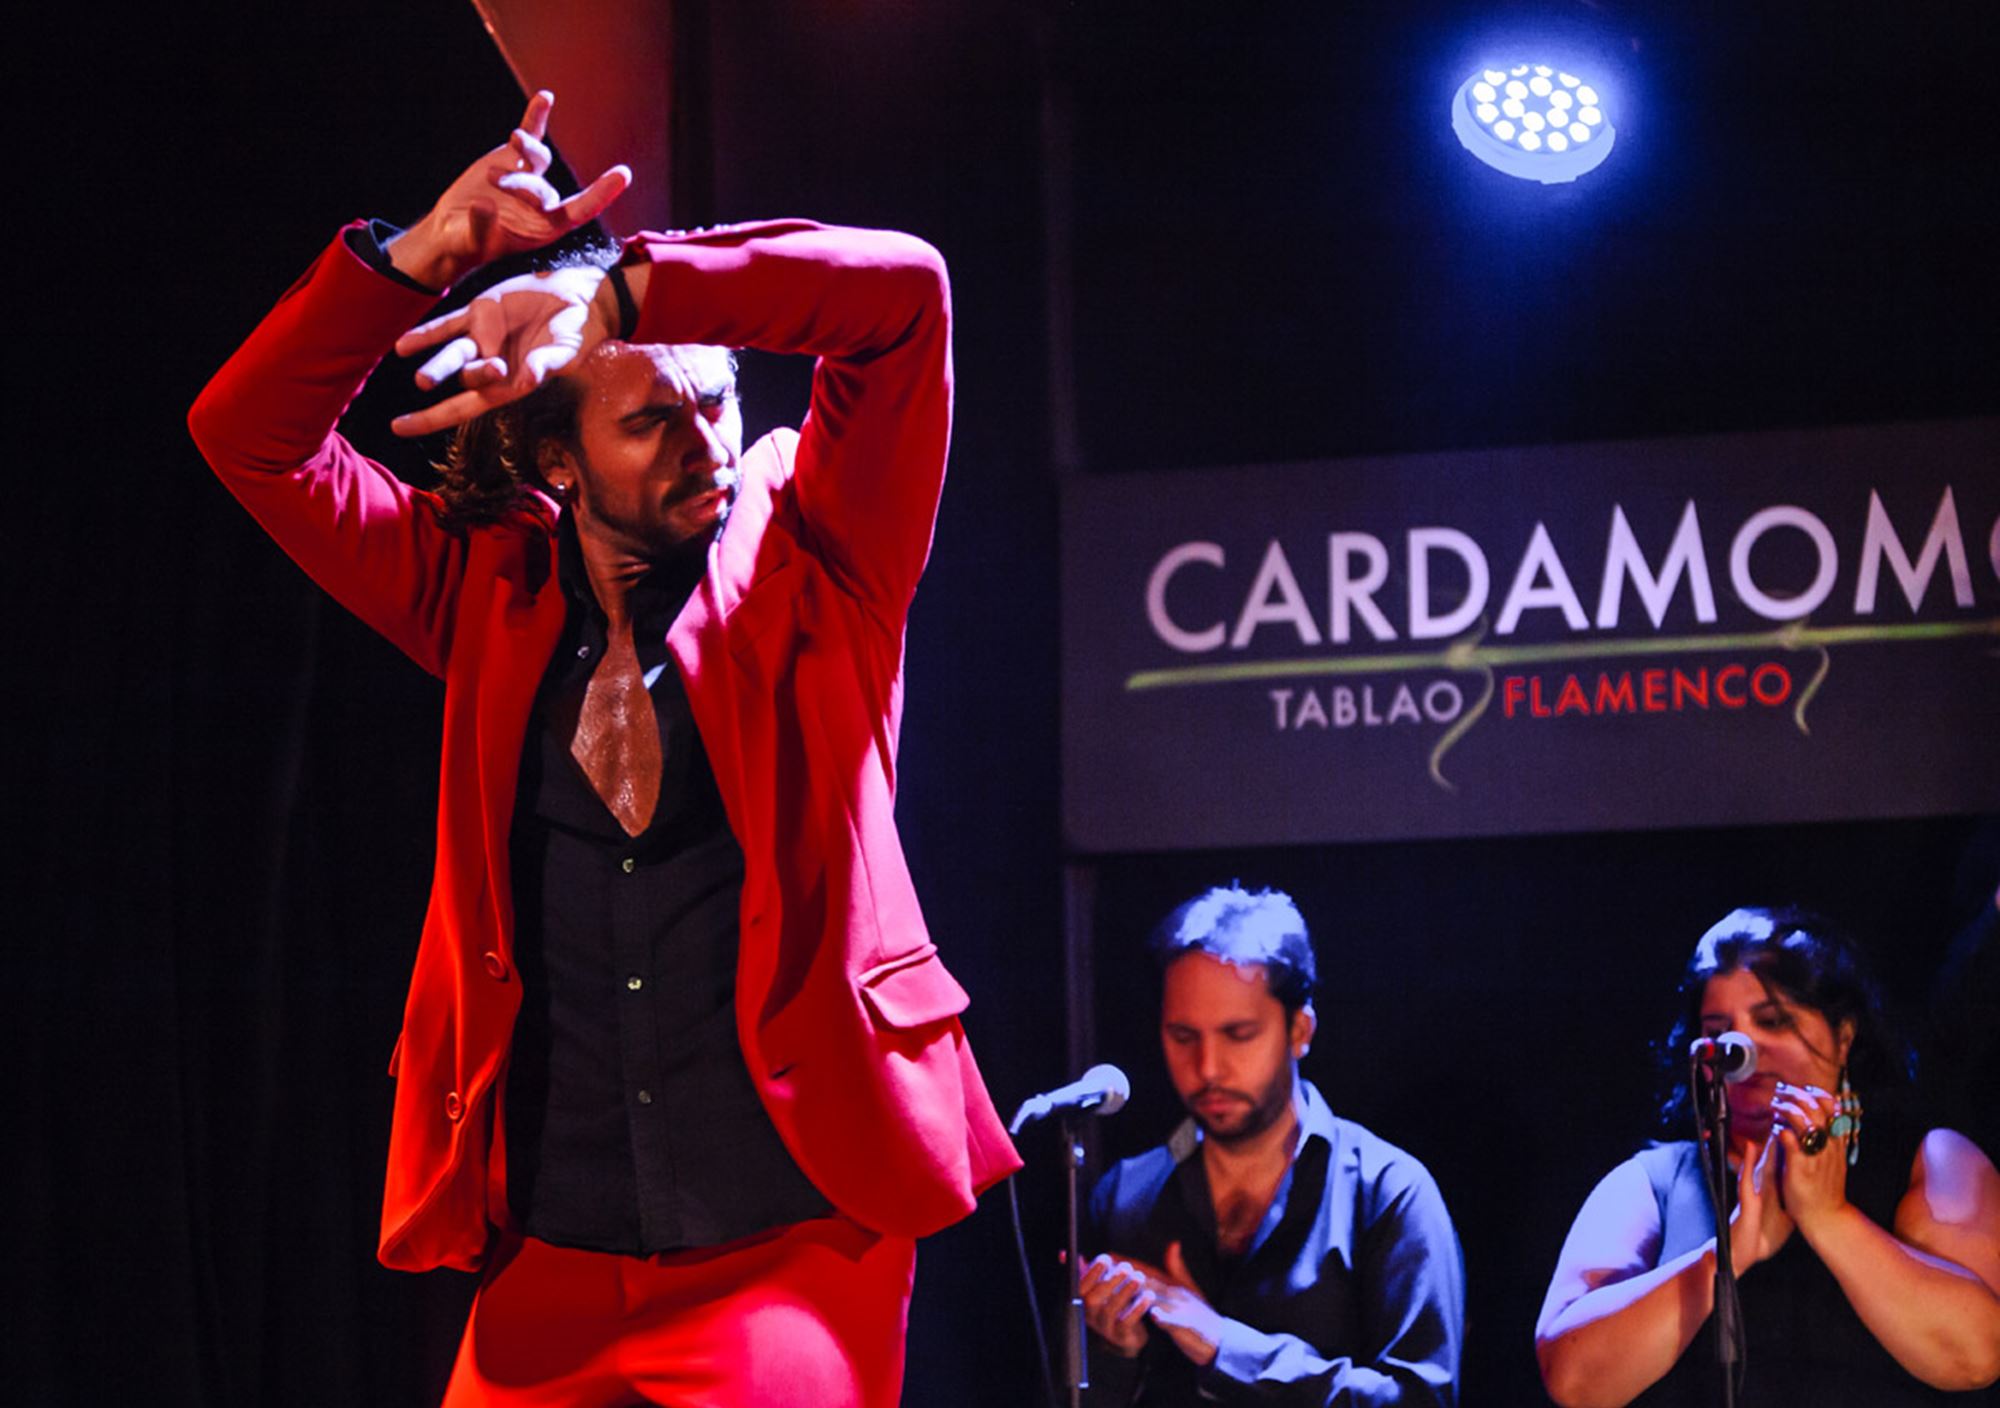 Show in Cardamomo Tablao Flamenco Madrid